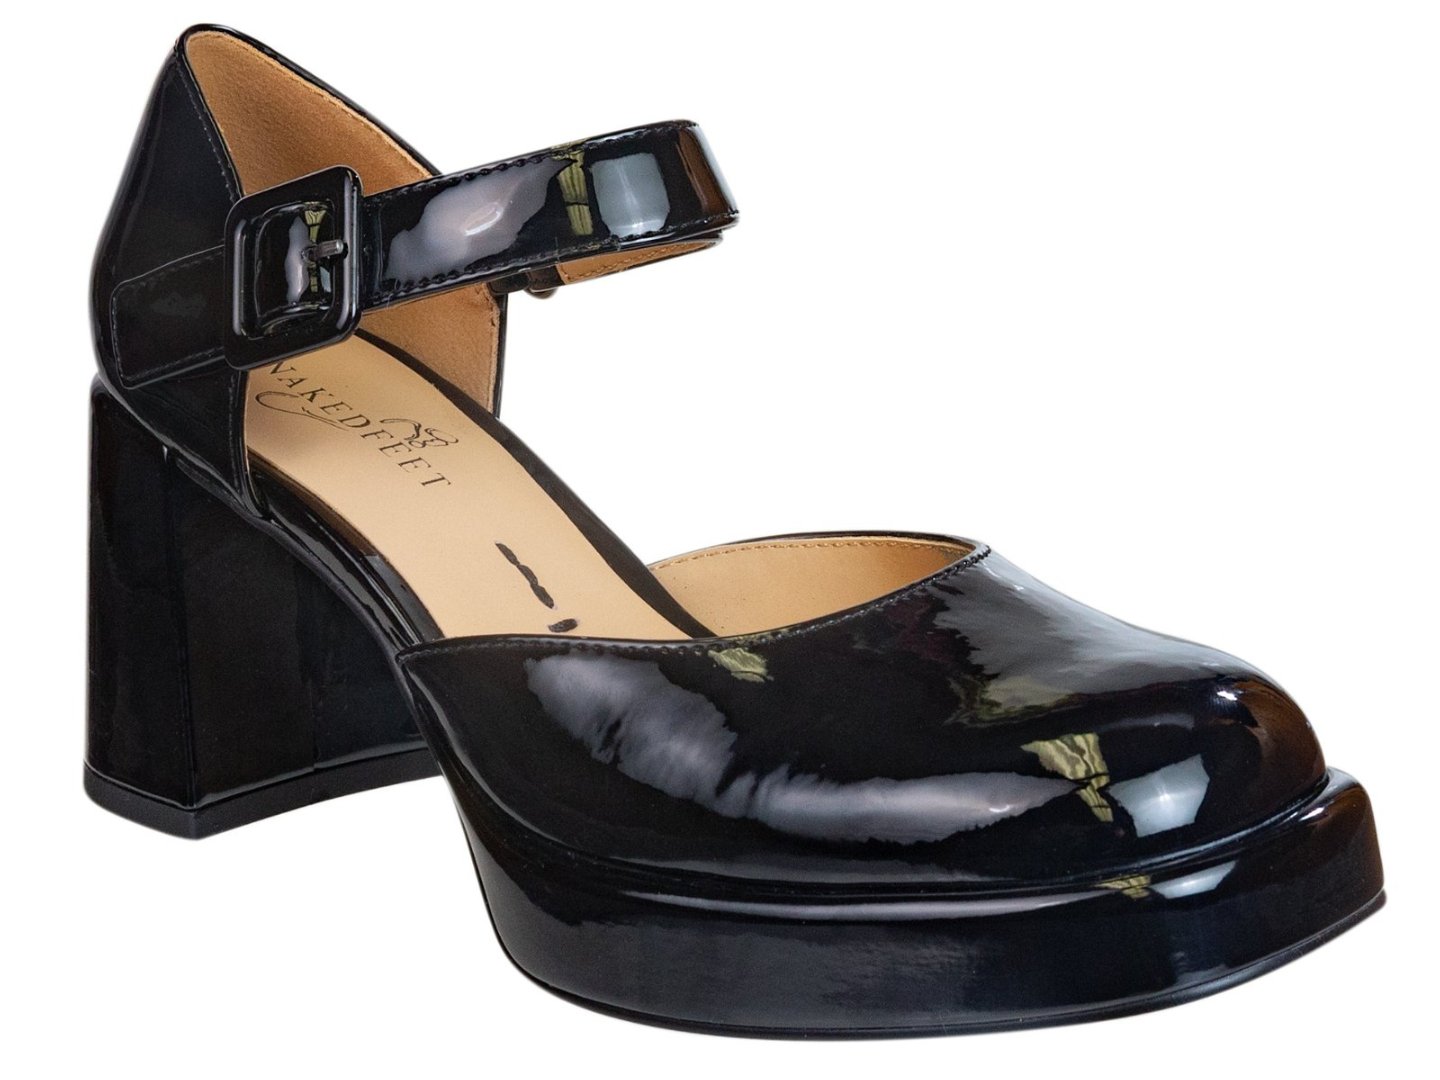 Sandals Clogs | Block Heel | Shoes Online Shop